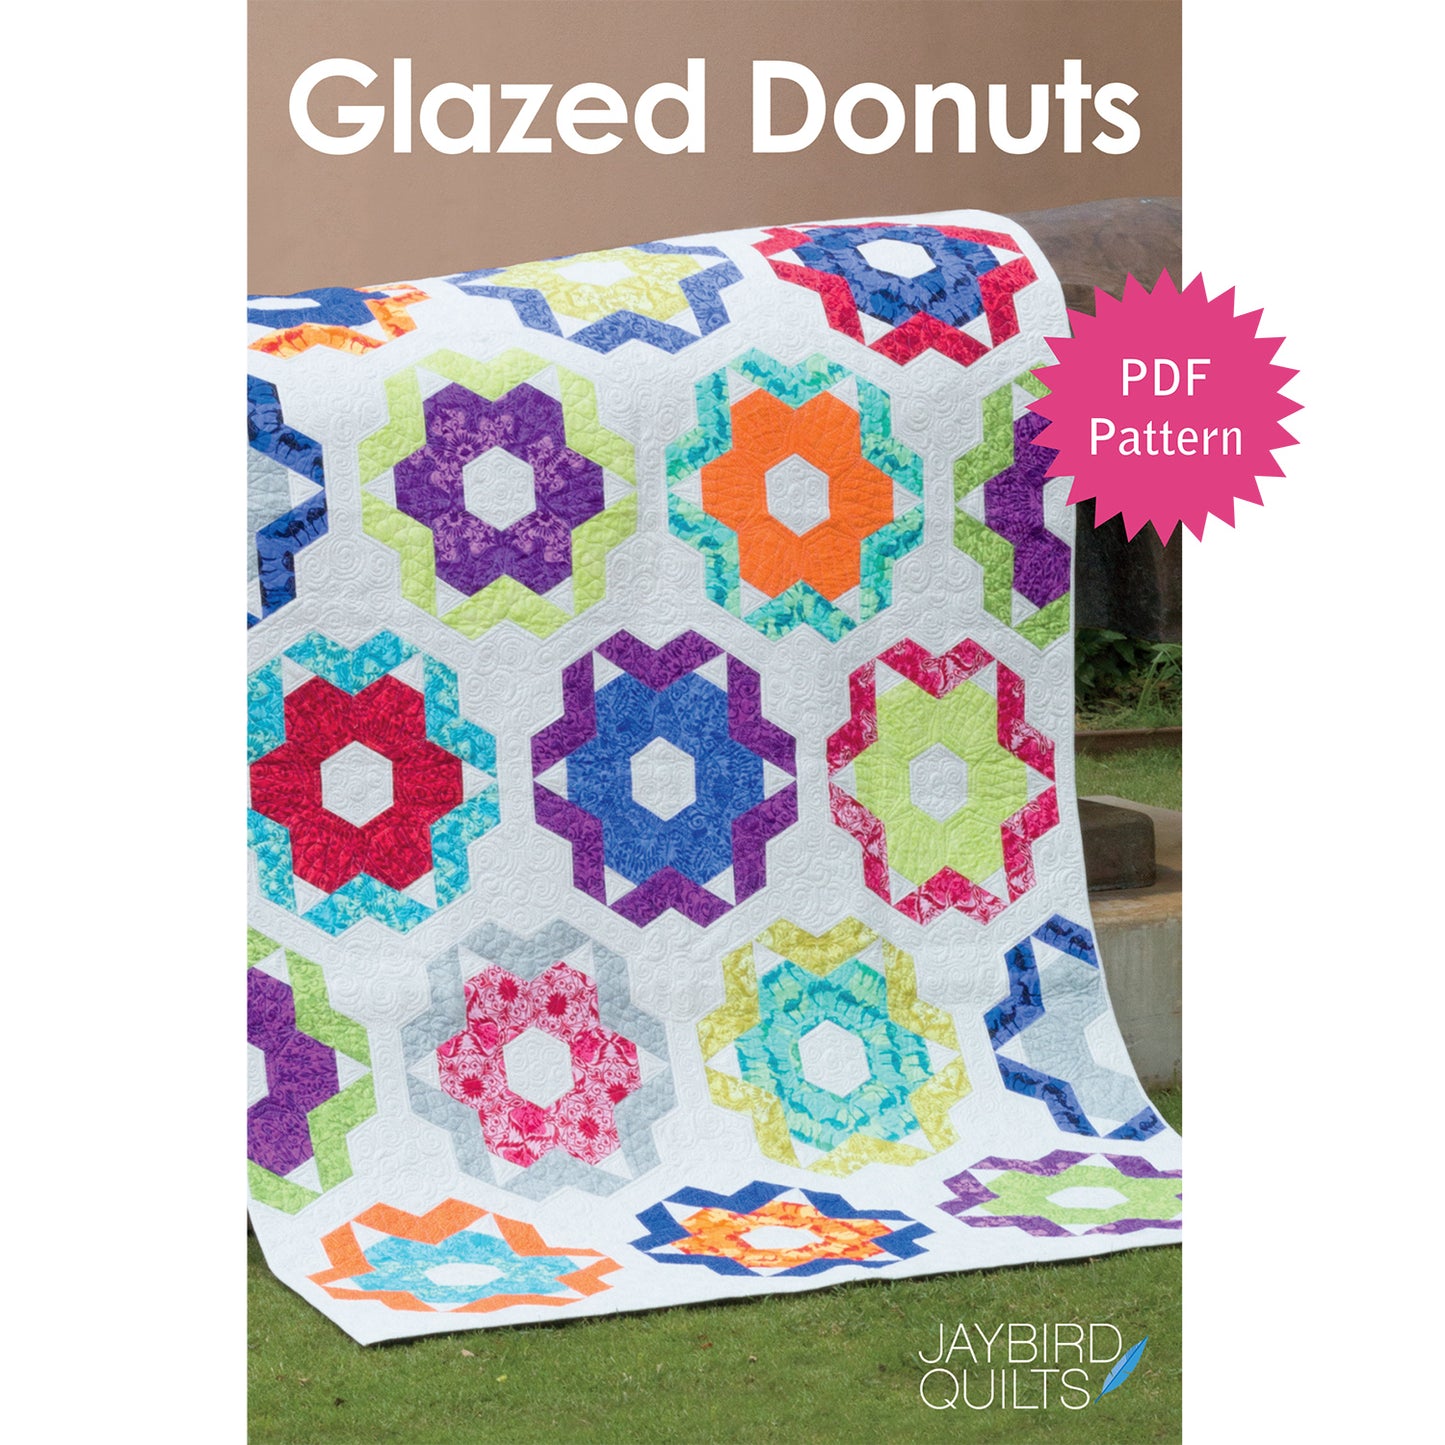 Glazed Donuts Quilt PDF Pattern